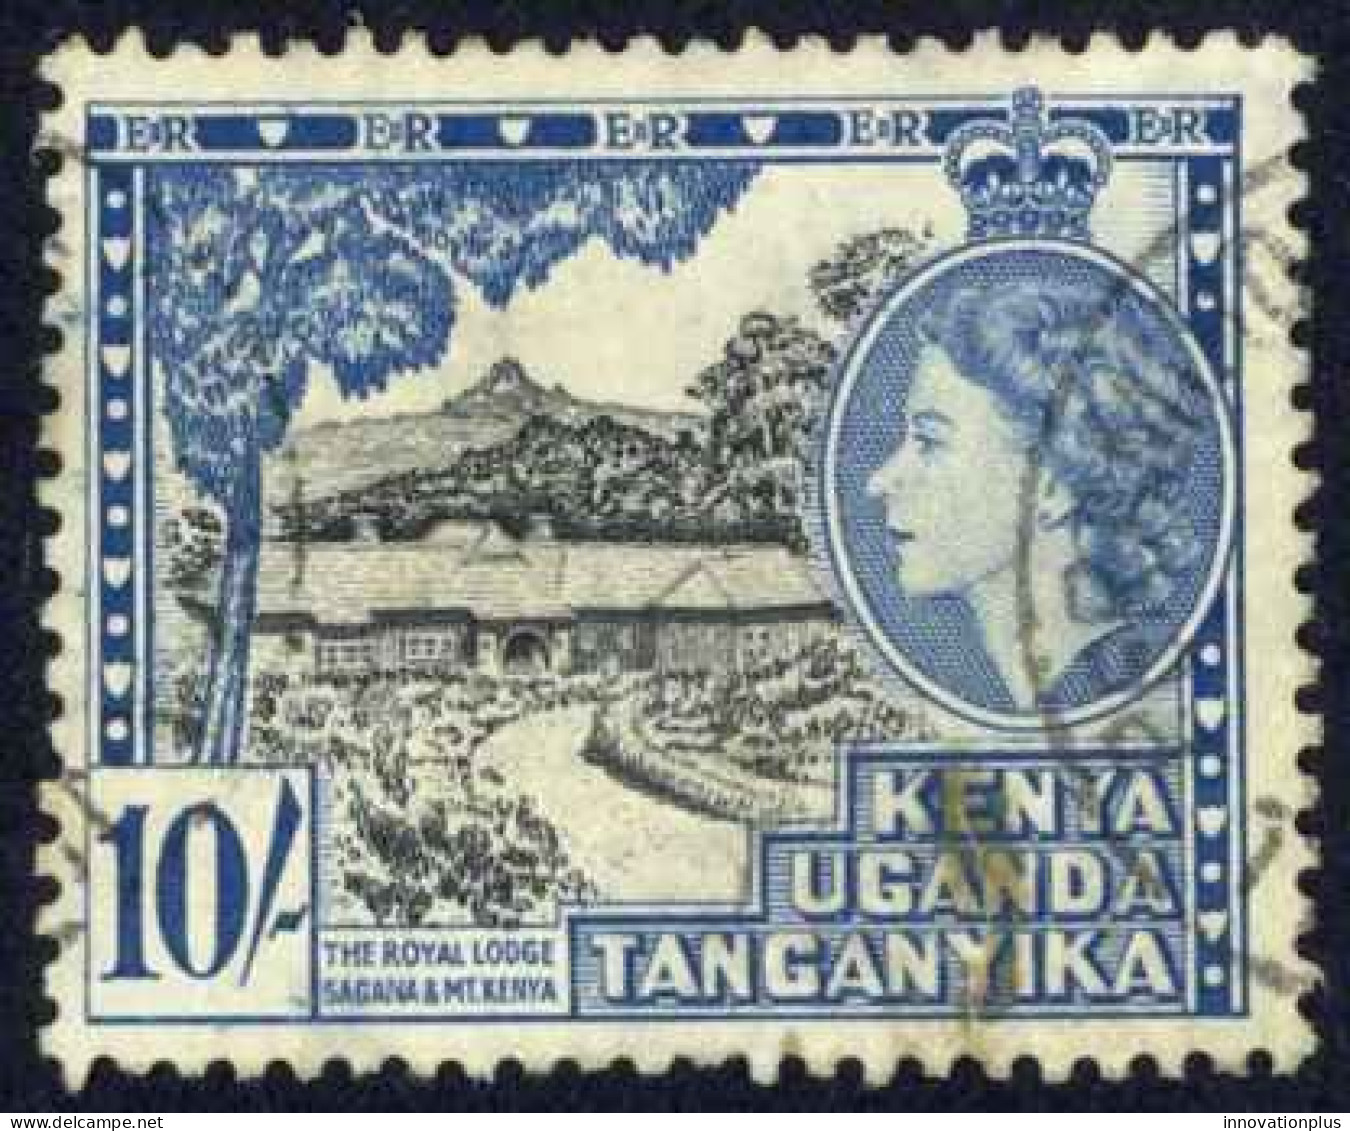 Kenya, Uganda, Tanzania Sc# 116 Used (a) 1954-1959 Royal Lodge, Sagana - Kenya, Uganda & Tanzania